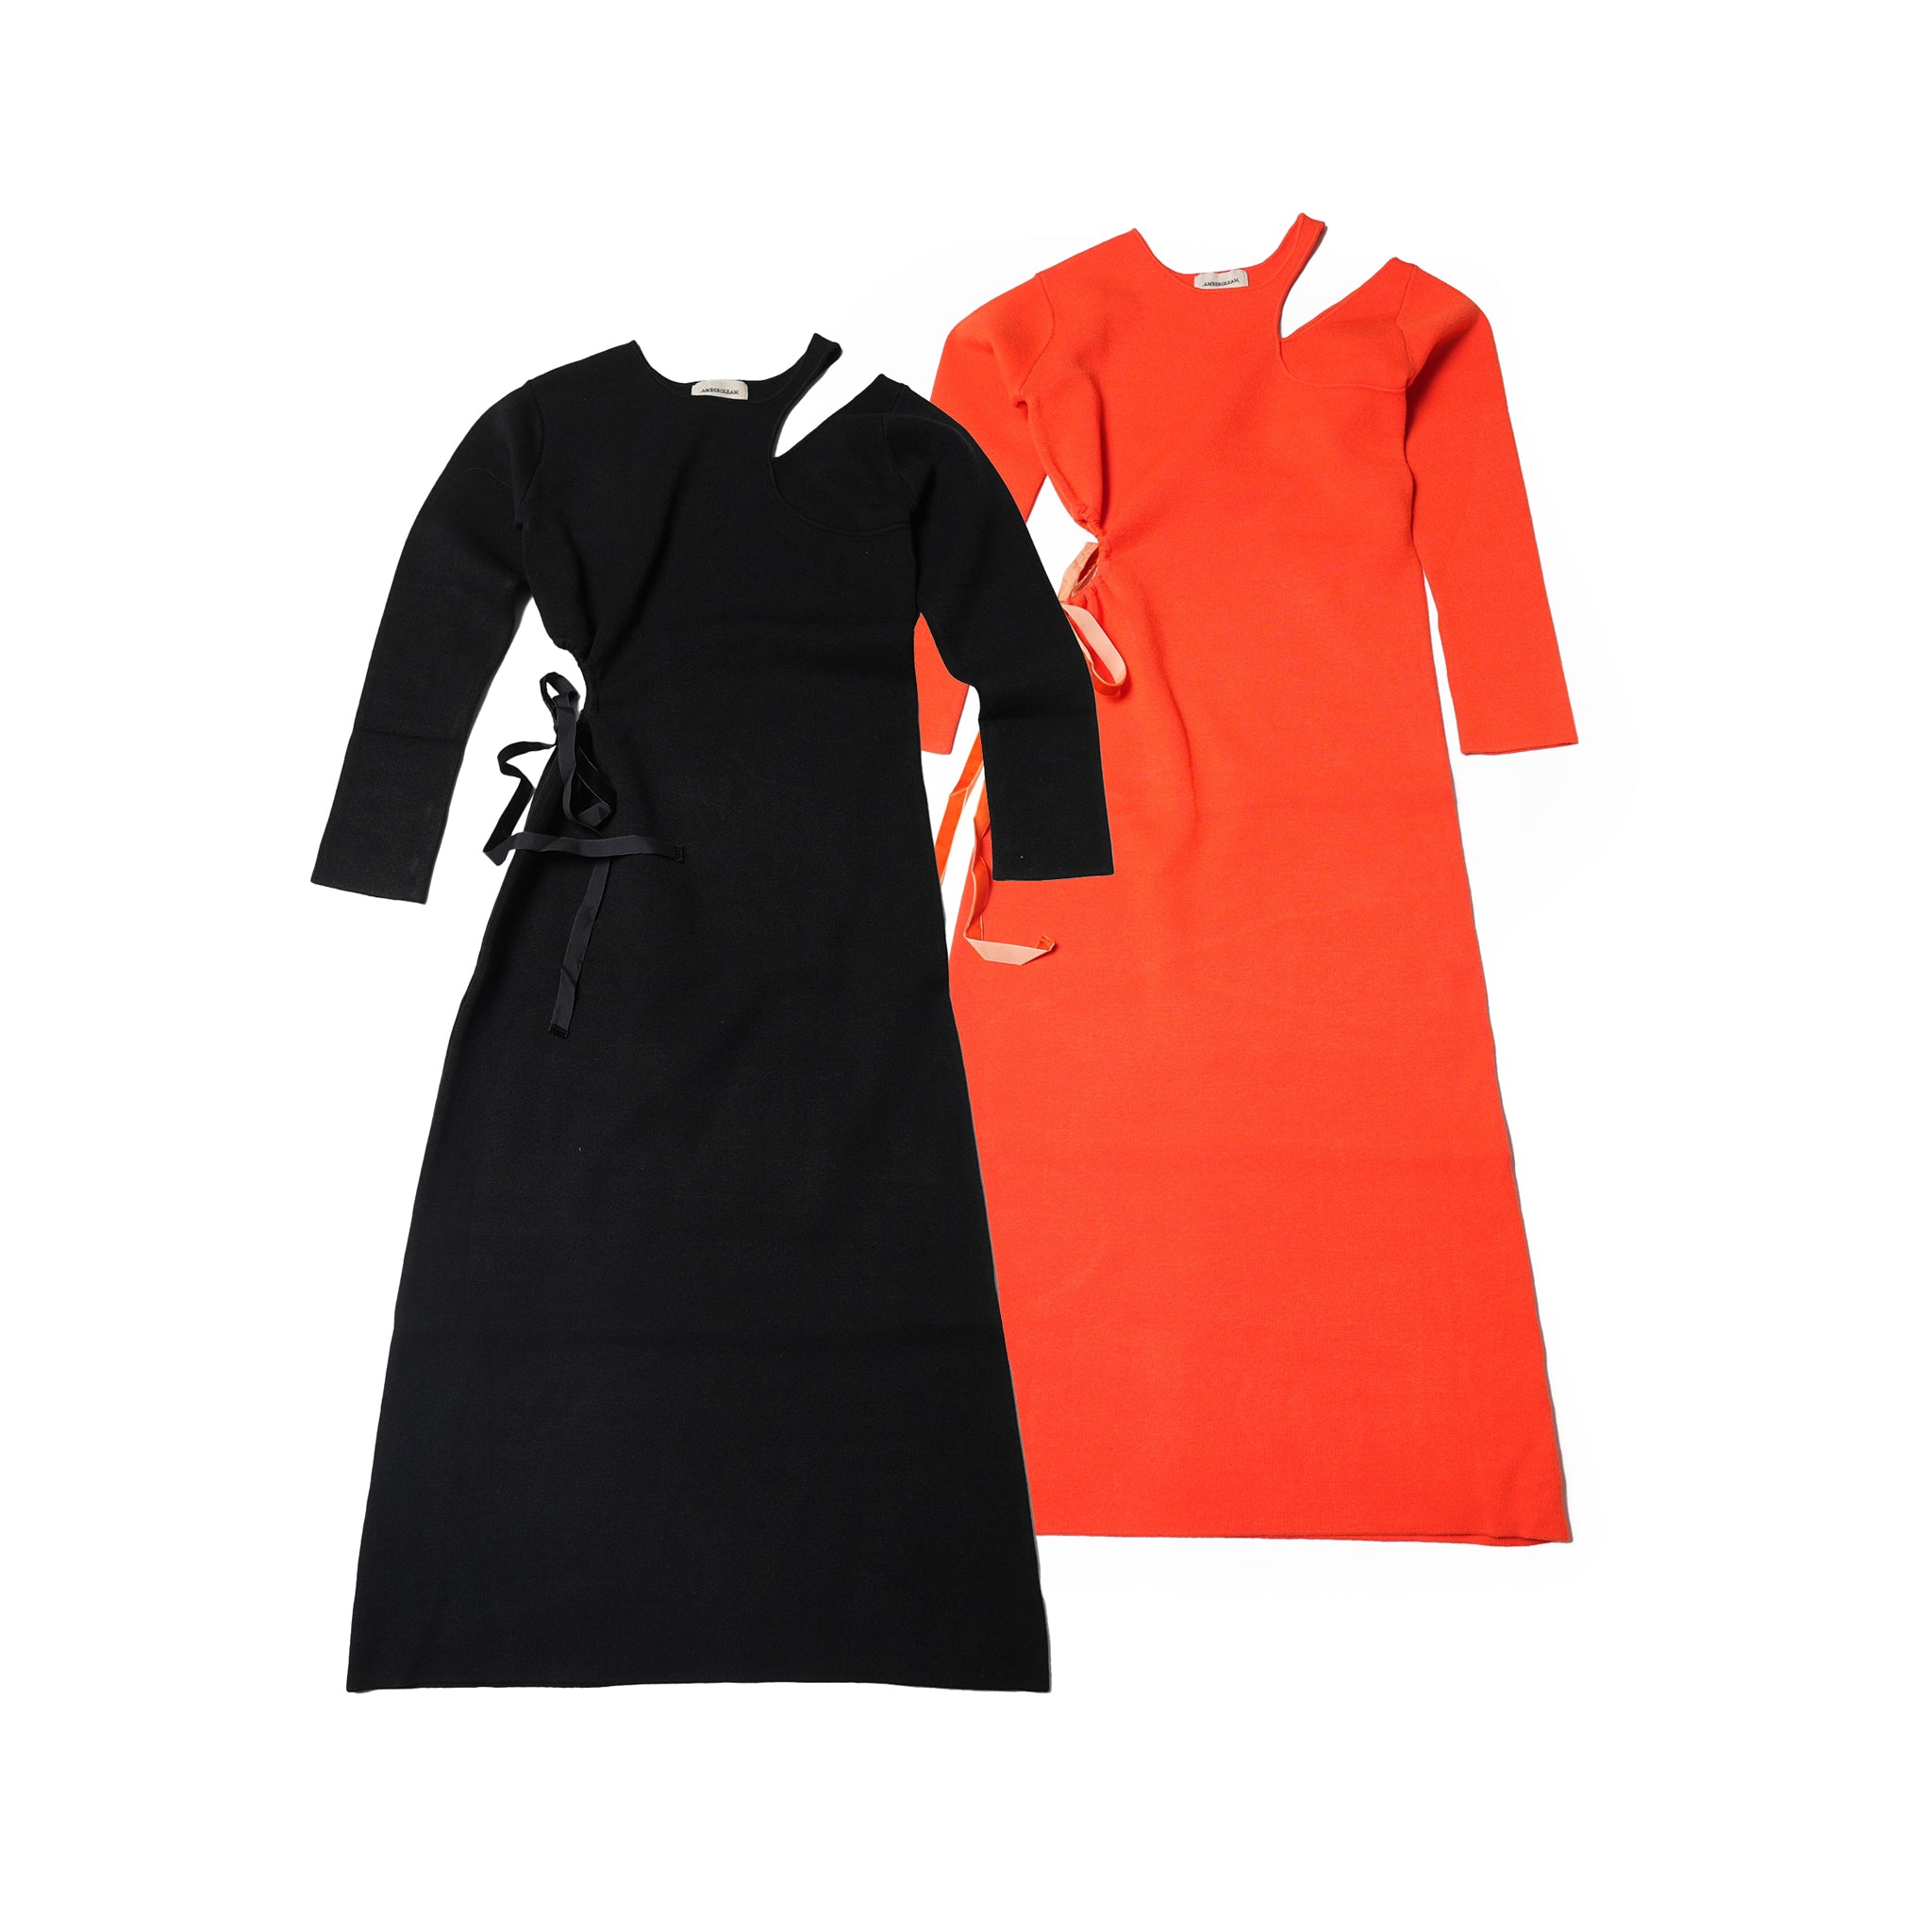 Name:Art Knit Dress | Color:Black / Valencia Orange【AMBERGLEAM_